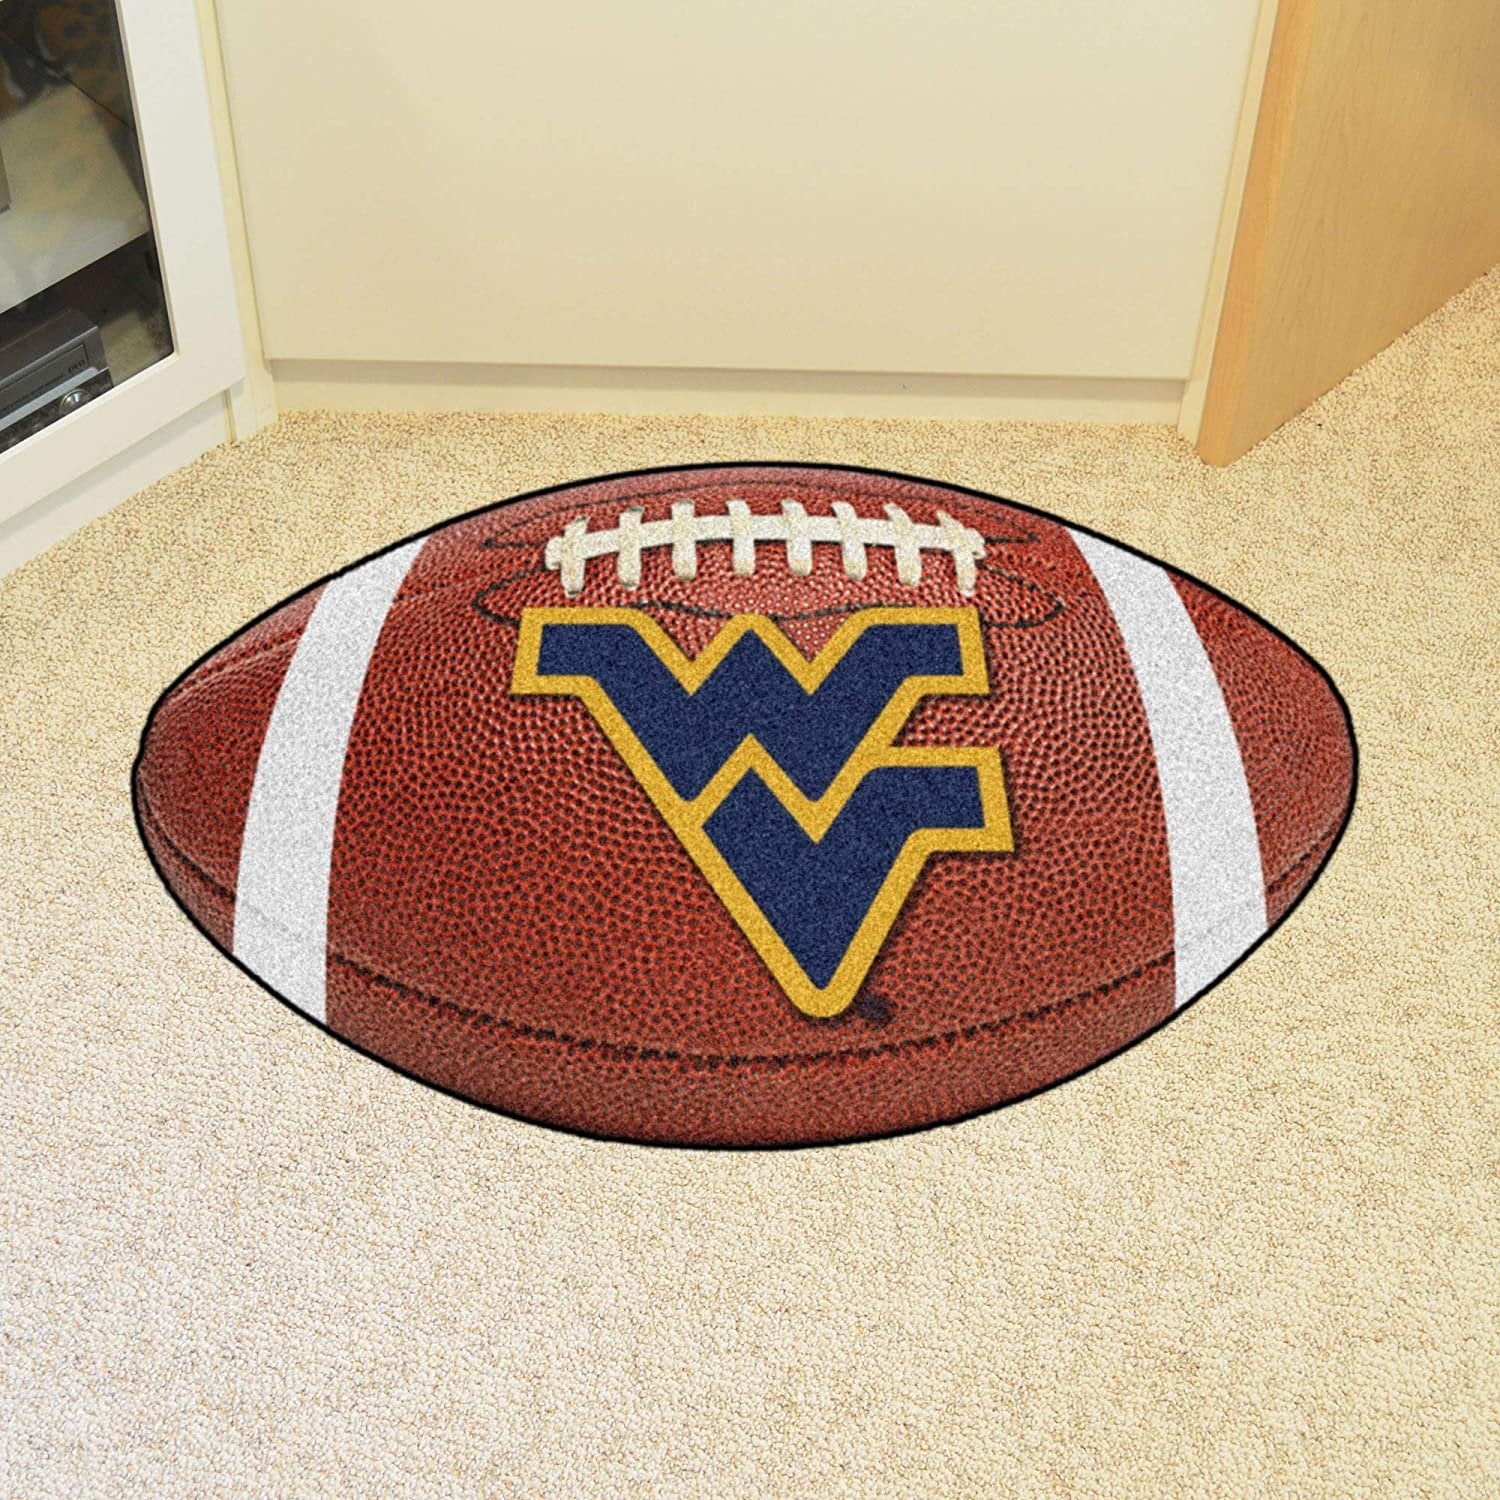 West Virginia University Mountaineers Floor Mat Area Rug, 20x32 Inch, Non-Skid Backing, Football Design